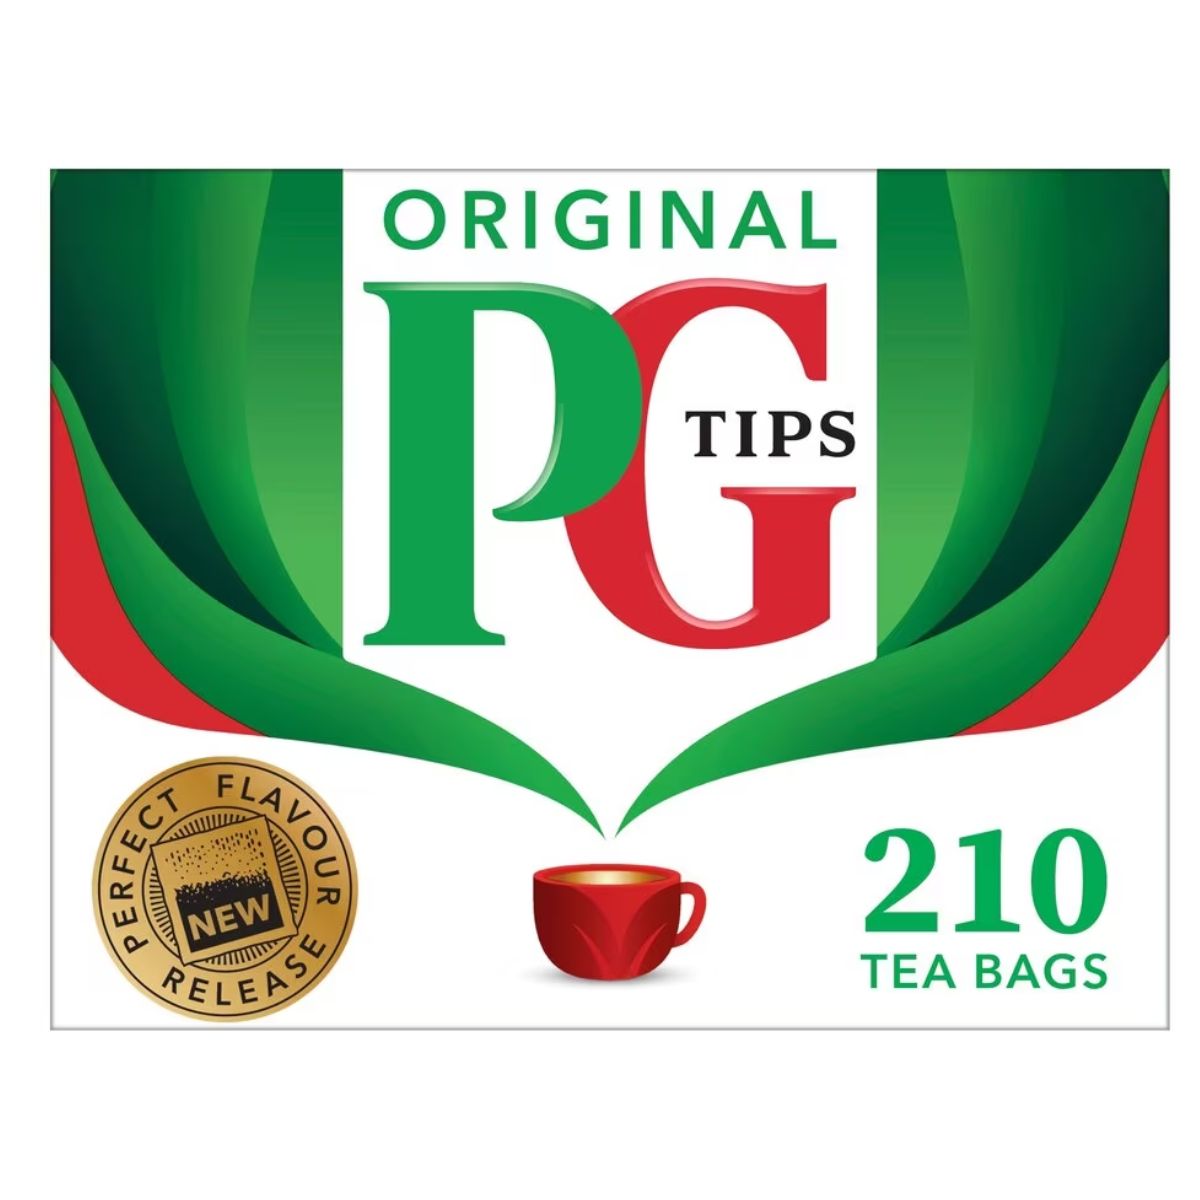 PG Tips - Original - 210 Sachets tea bags - PG Tips - Original - 210 Sachets tea bags - PG Tips - Original - 210 Sachets tea bags - PG Tips - Original - 210 Sachets tea bags